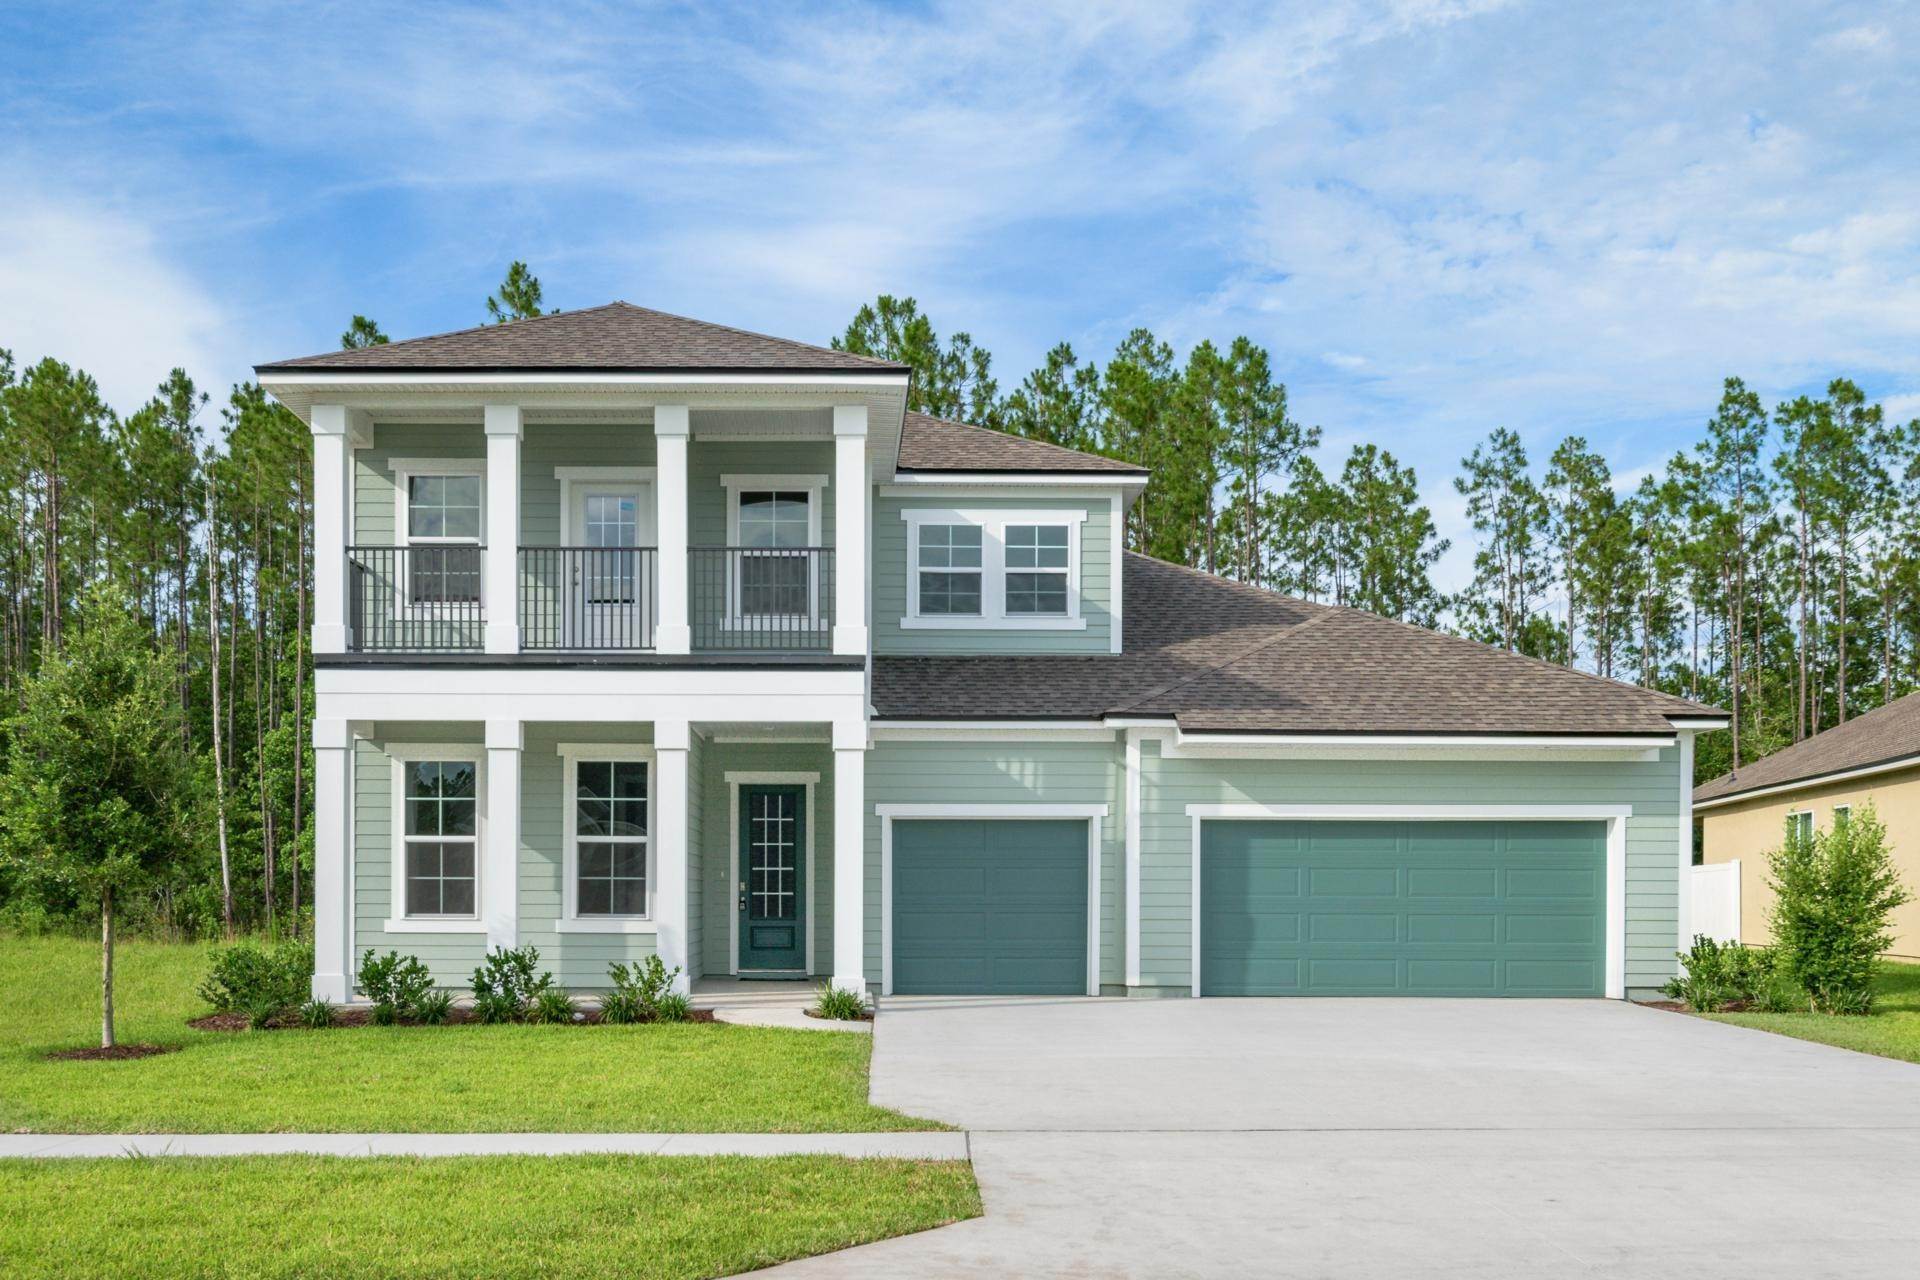 Blair Estates building at Autumn Garden Drive, Jacksonville, FL 32223